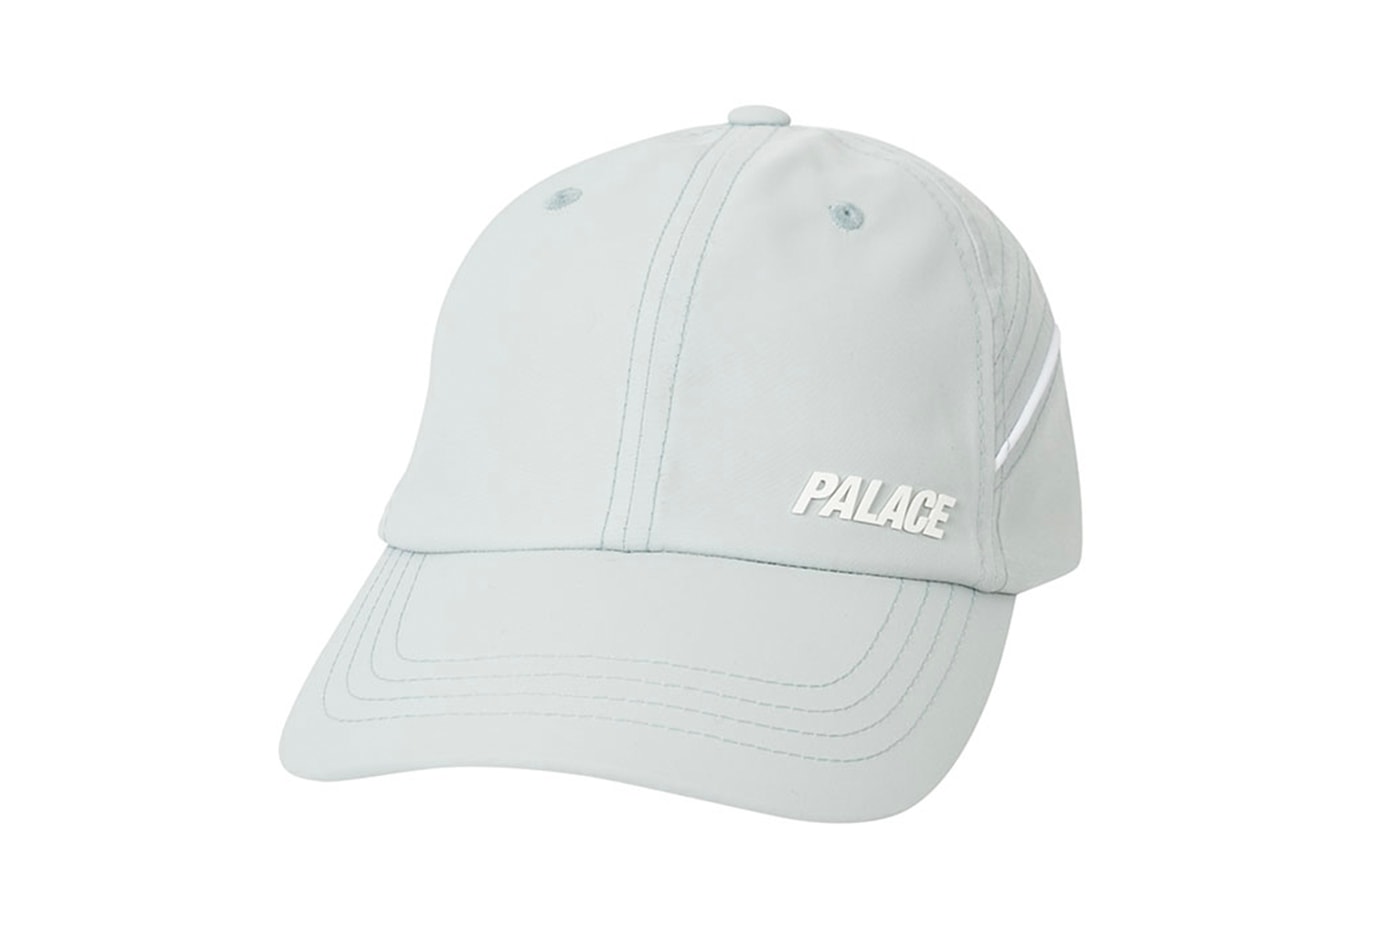 Palace Winter 2020 Accessories Hats collection drop info frozen green peas boxing gloves deerstalkers visors